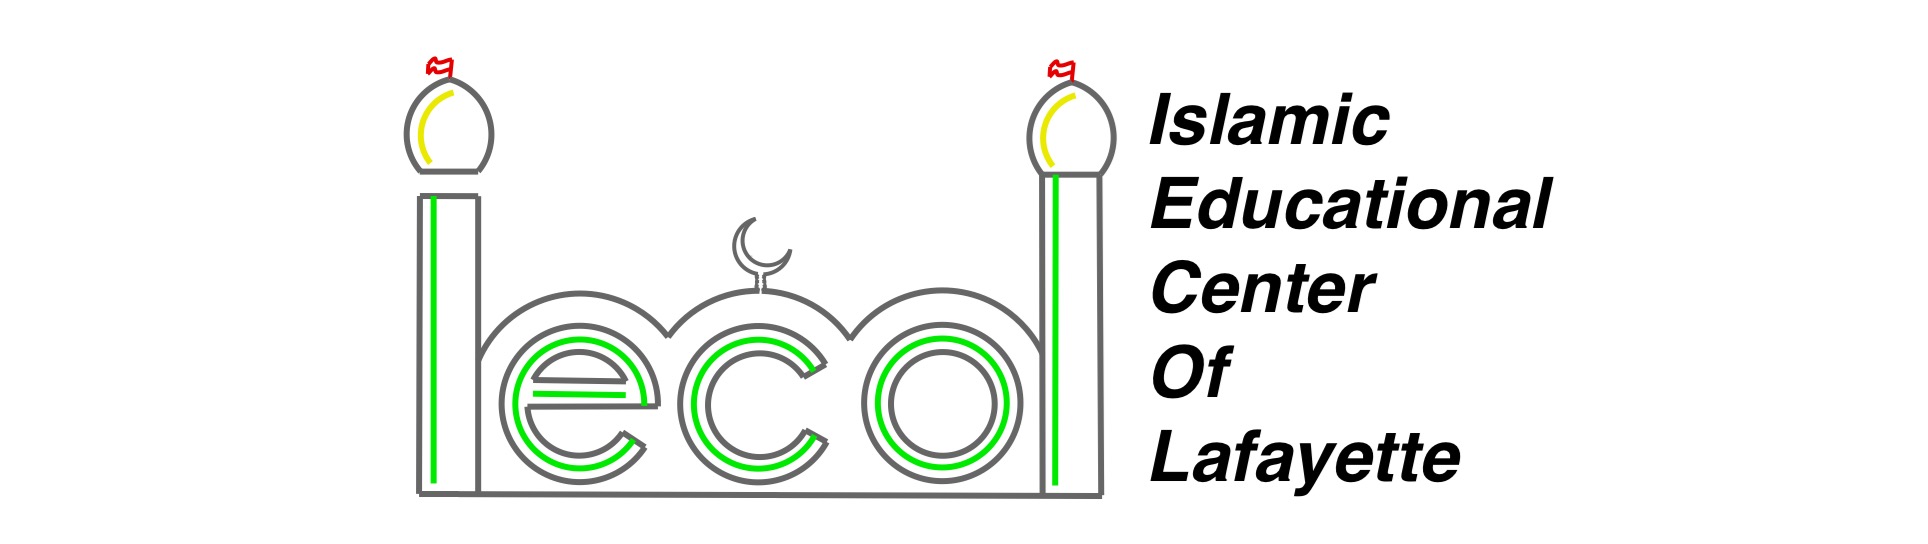 Islamic Educational Center OF Lafayette